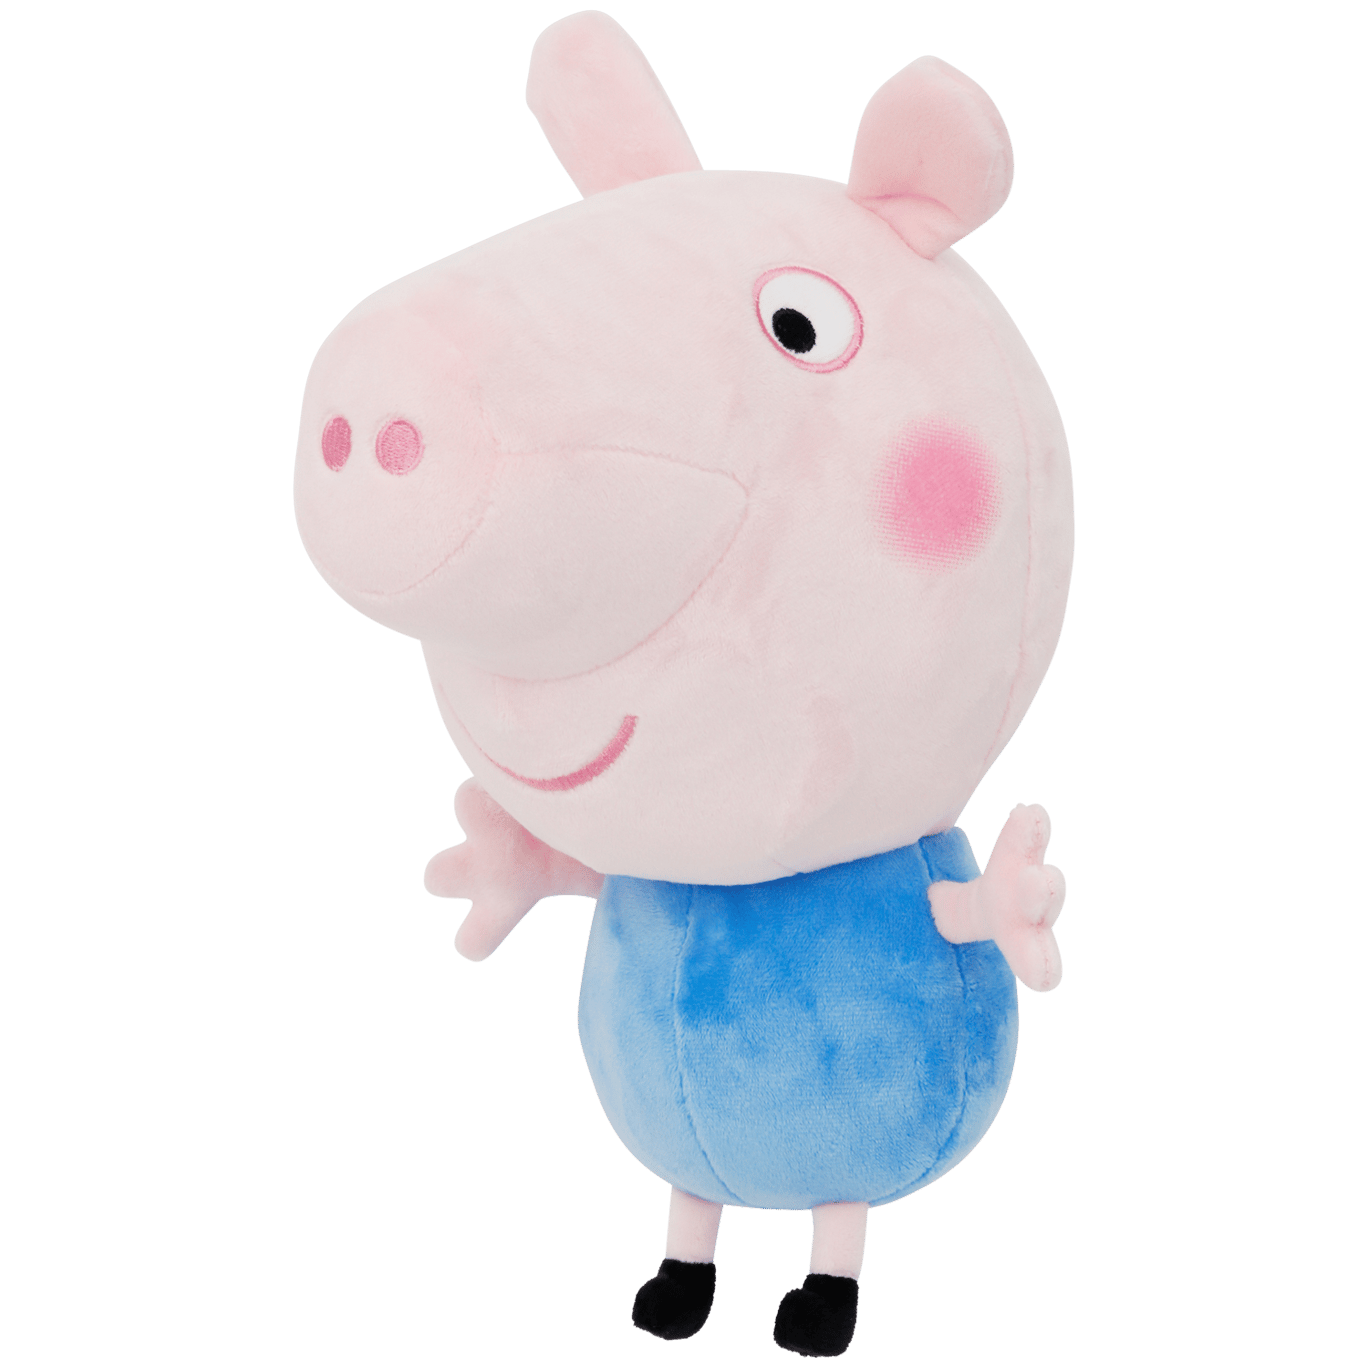 Maskotka Peppa Pig